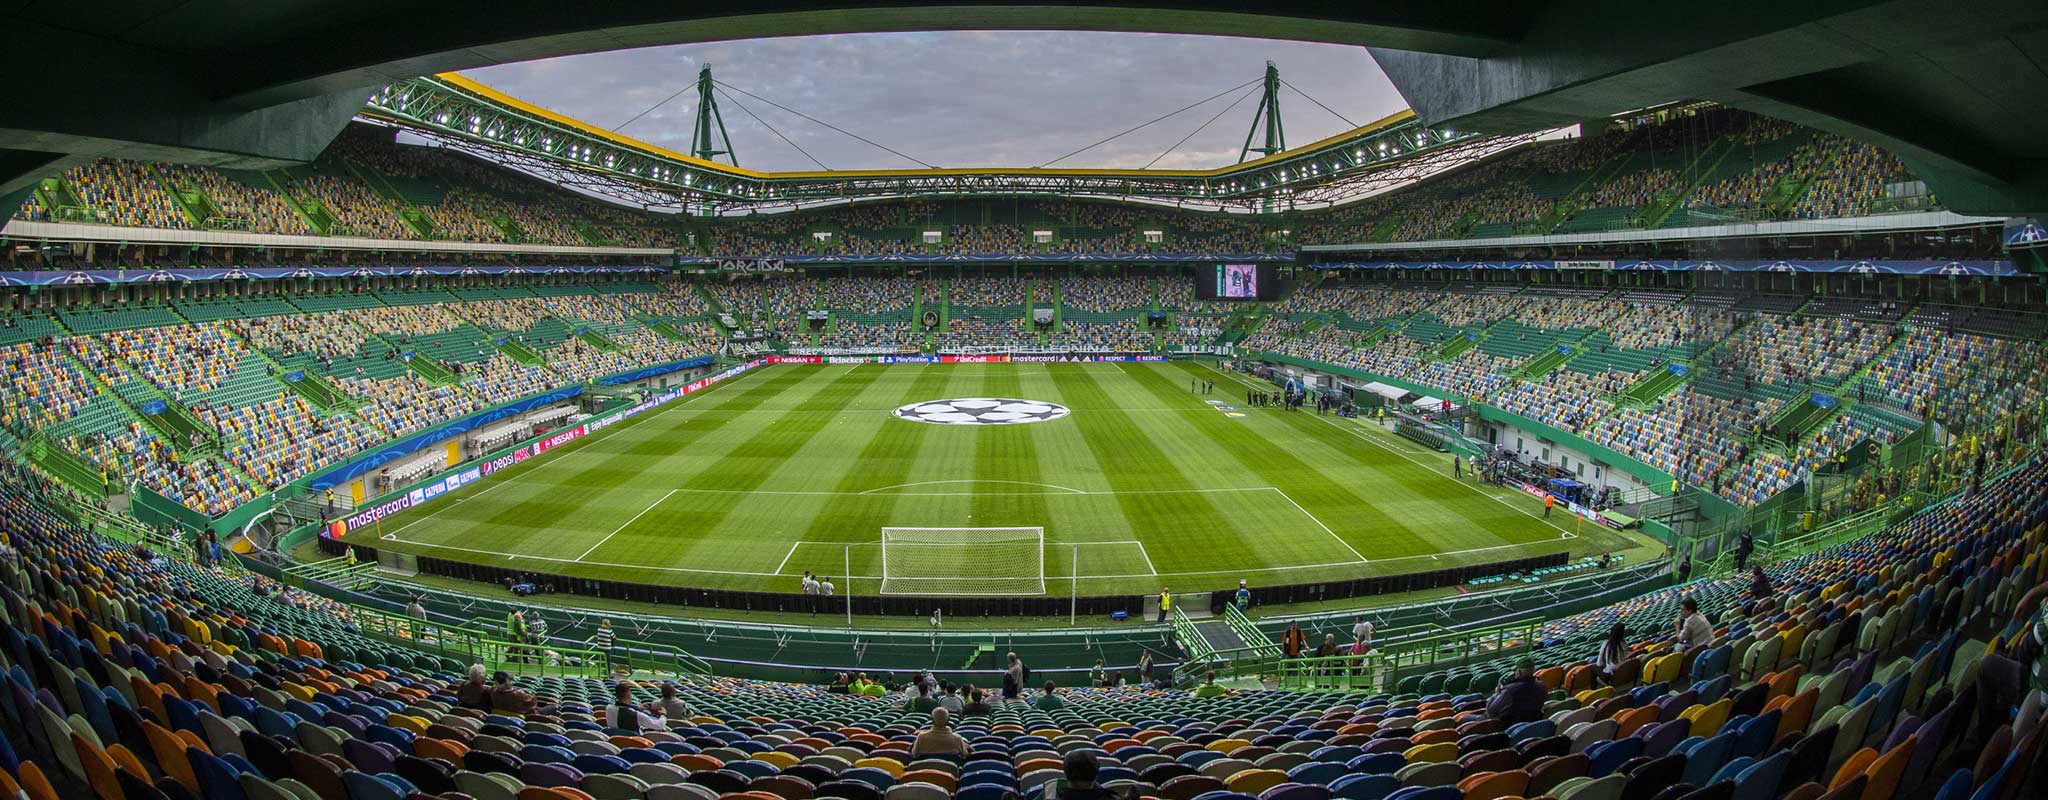 Sporting Lissabon vs Dortmund Spiel Schal Champions League 2021 2022 